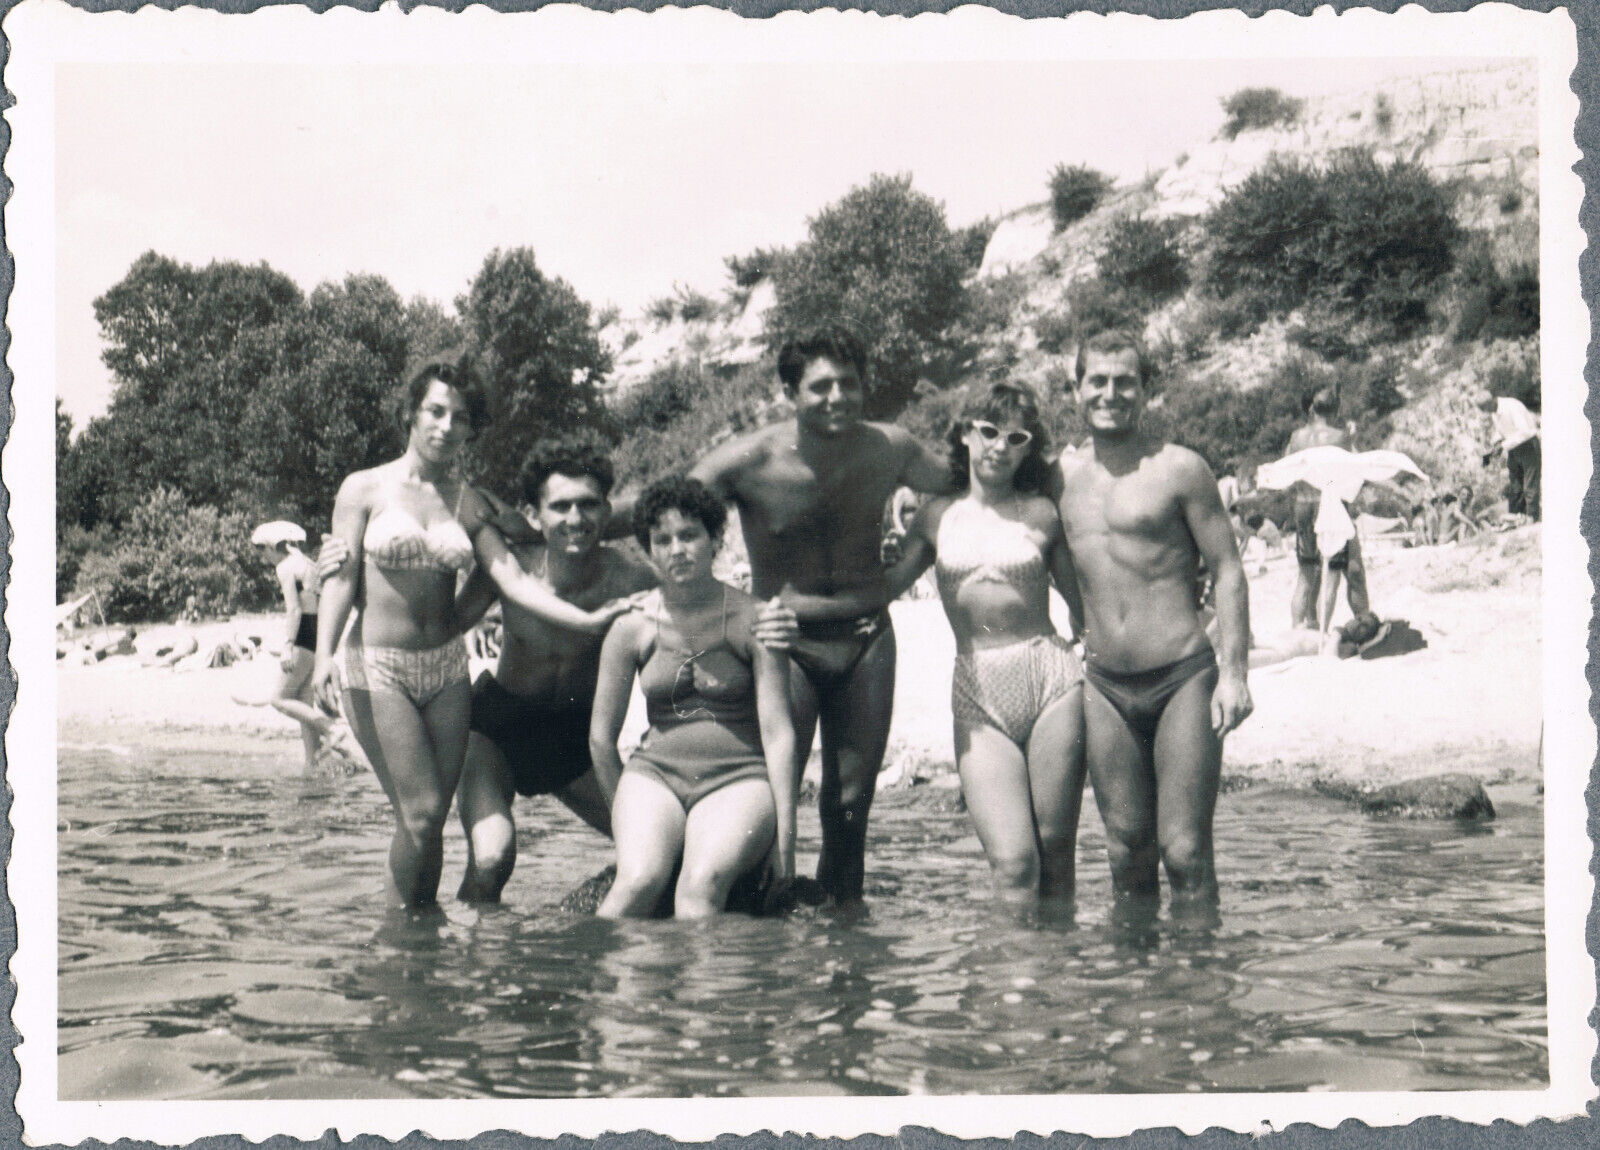 1950s Affectionate Men Trunks Bulge Pretty Women Bikini Beach Gay int Vint Photo